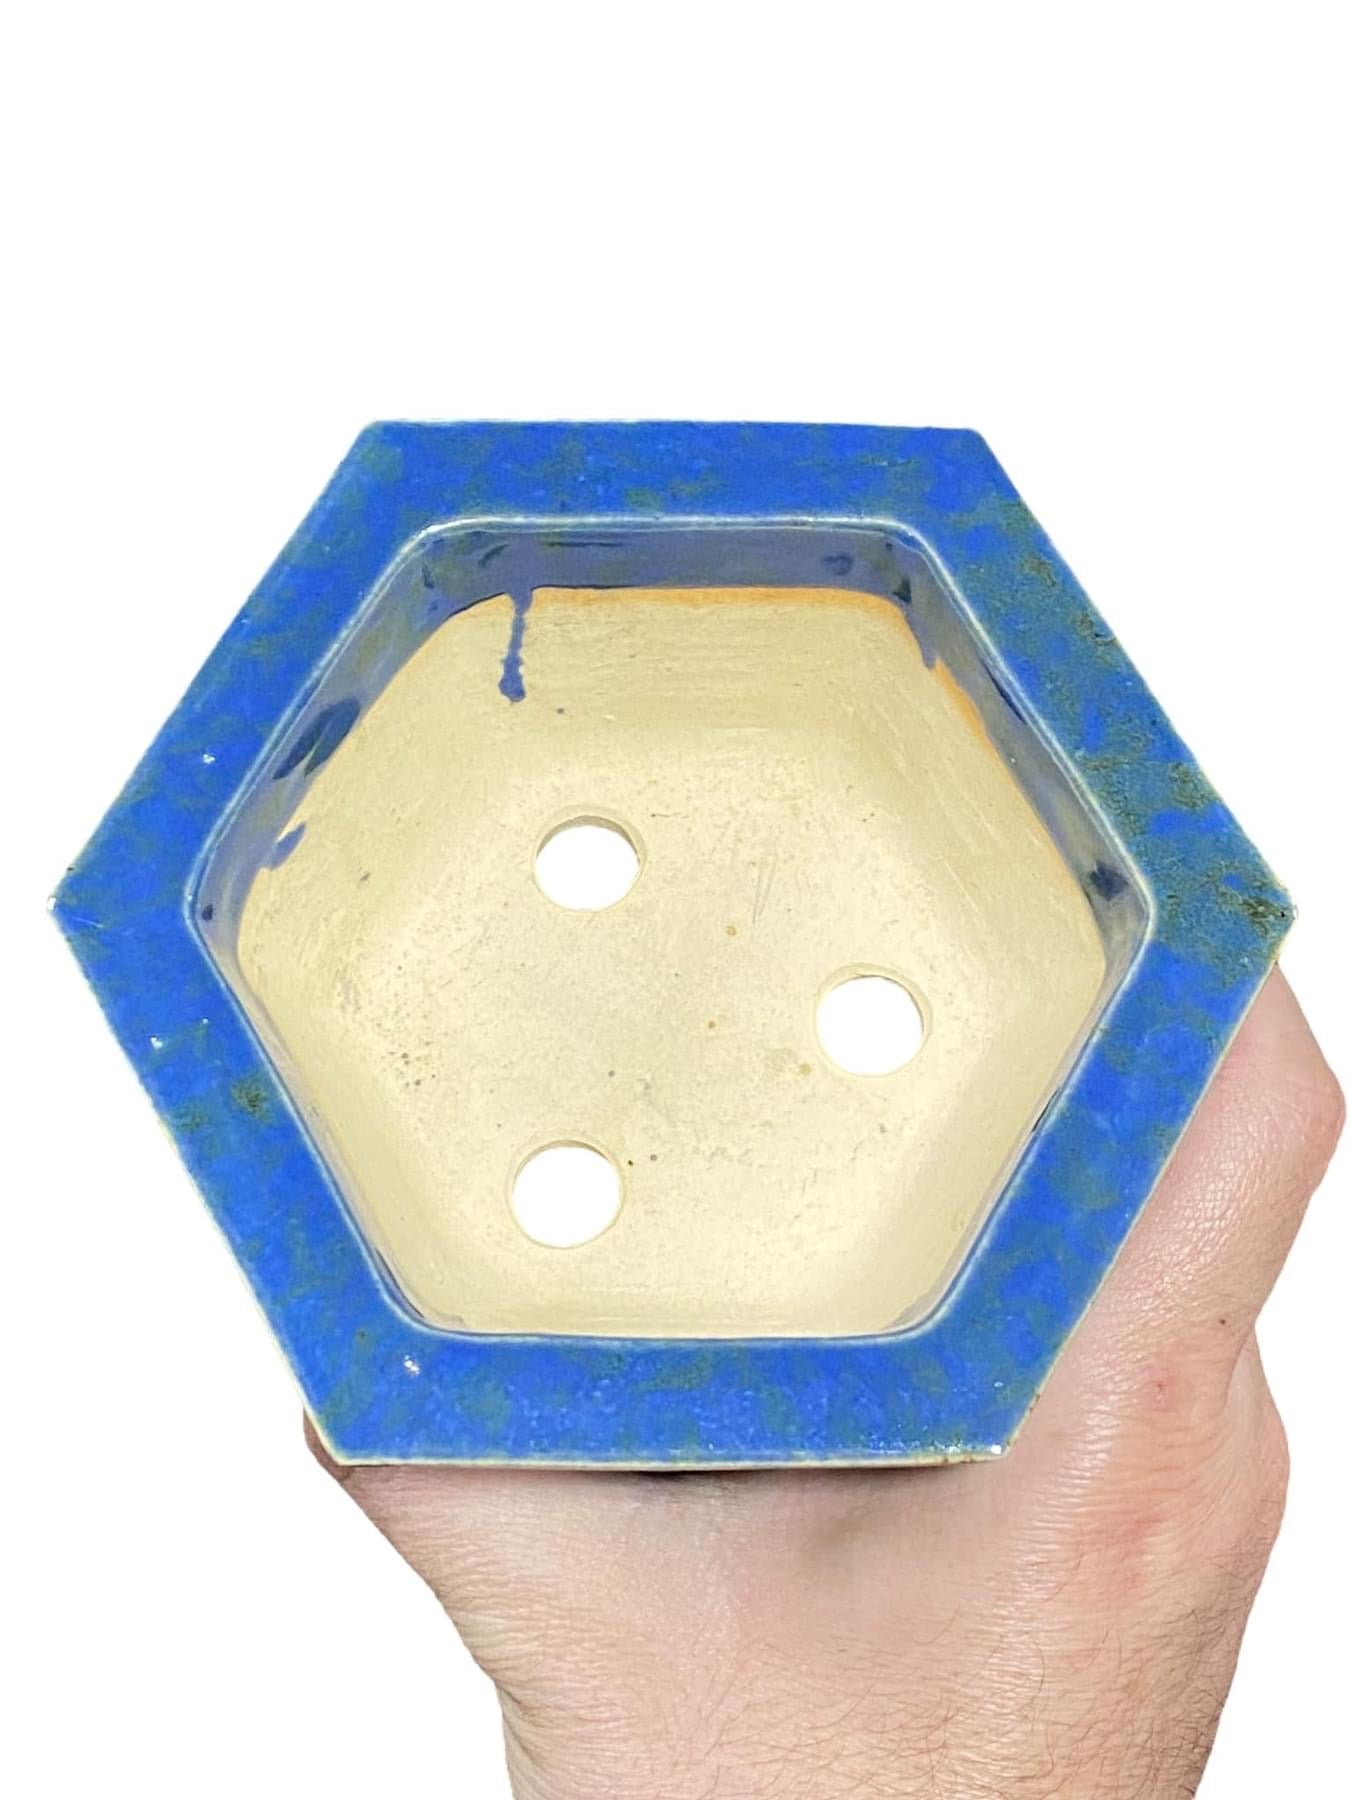 Fukuda Keiun - Blue and Green Hexagon Bonsai Pot